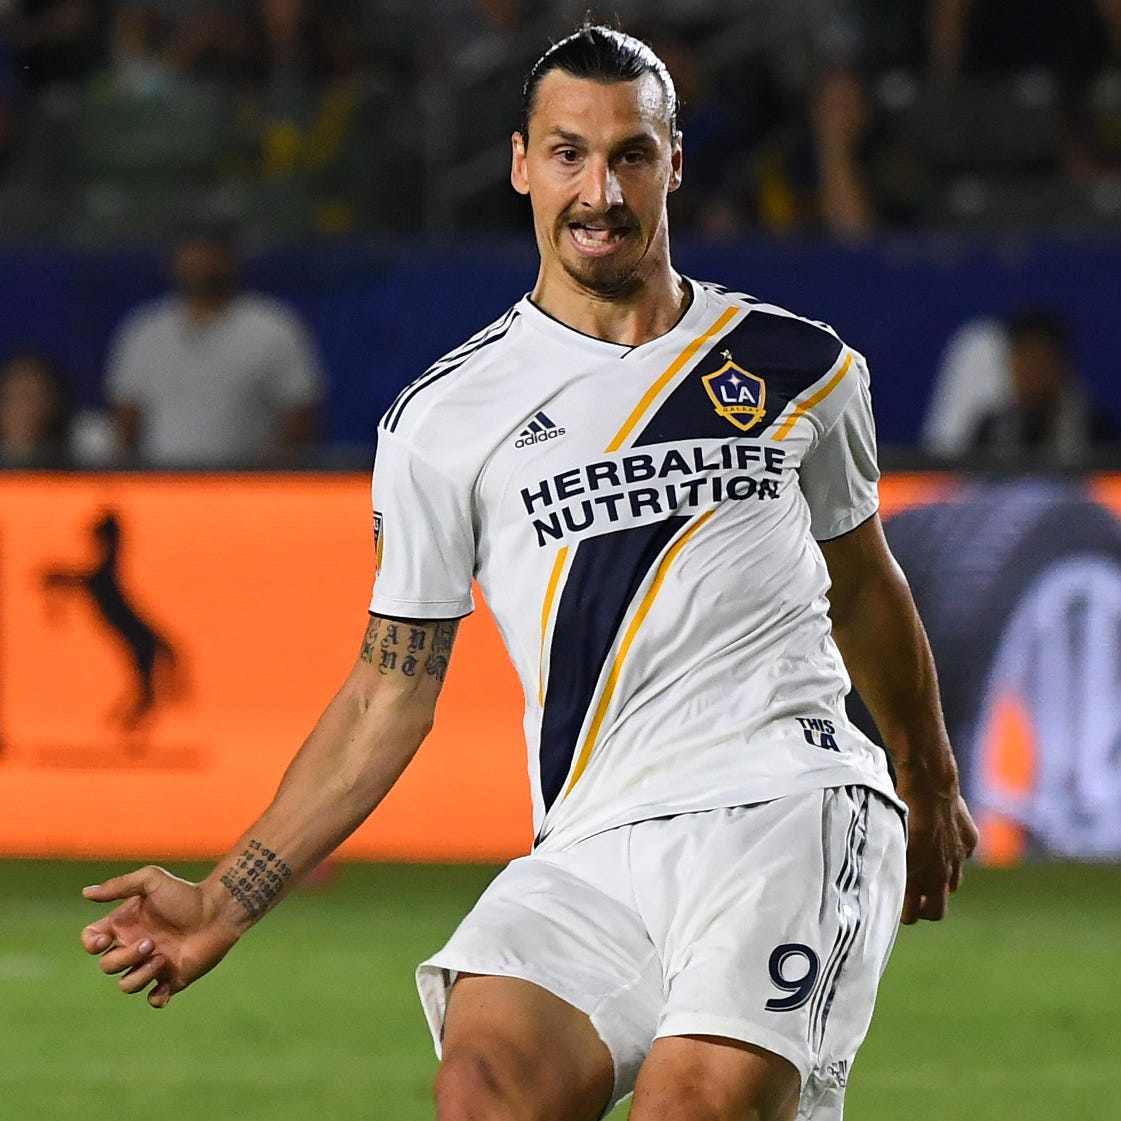 Los Angeles Galaxy forward Zlatan Ibrahimovic has 15 goals in 16 MLS starts